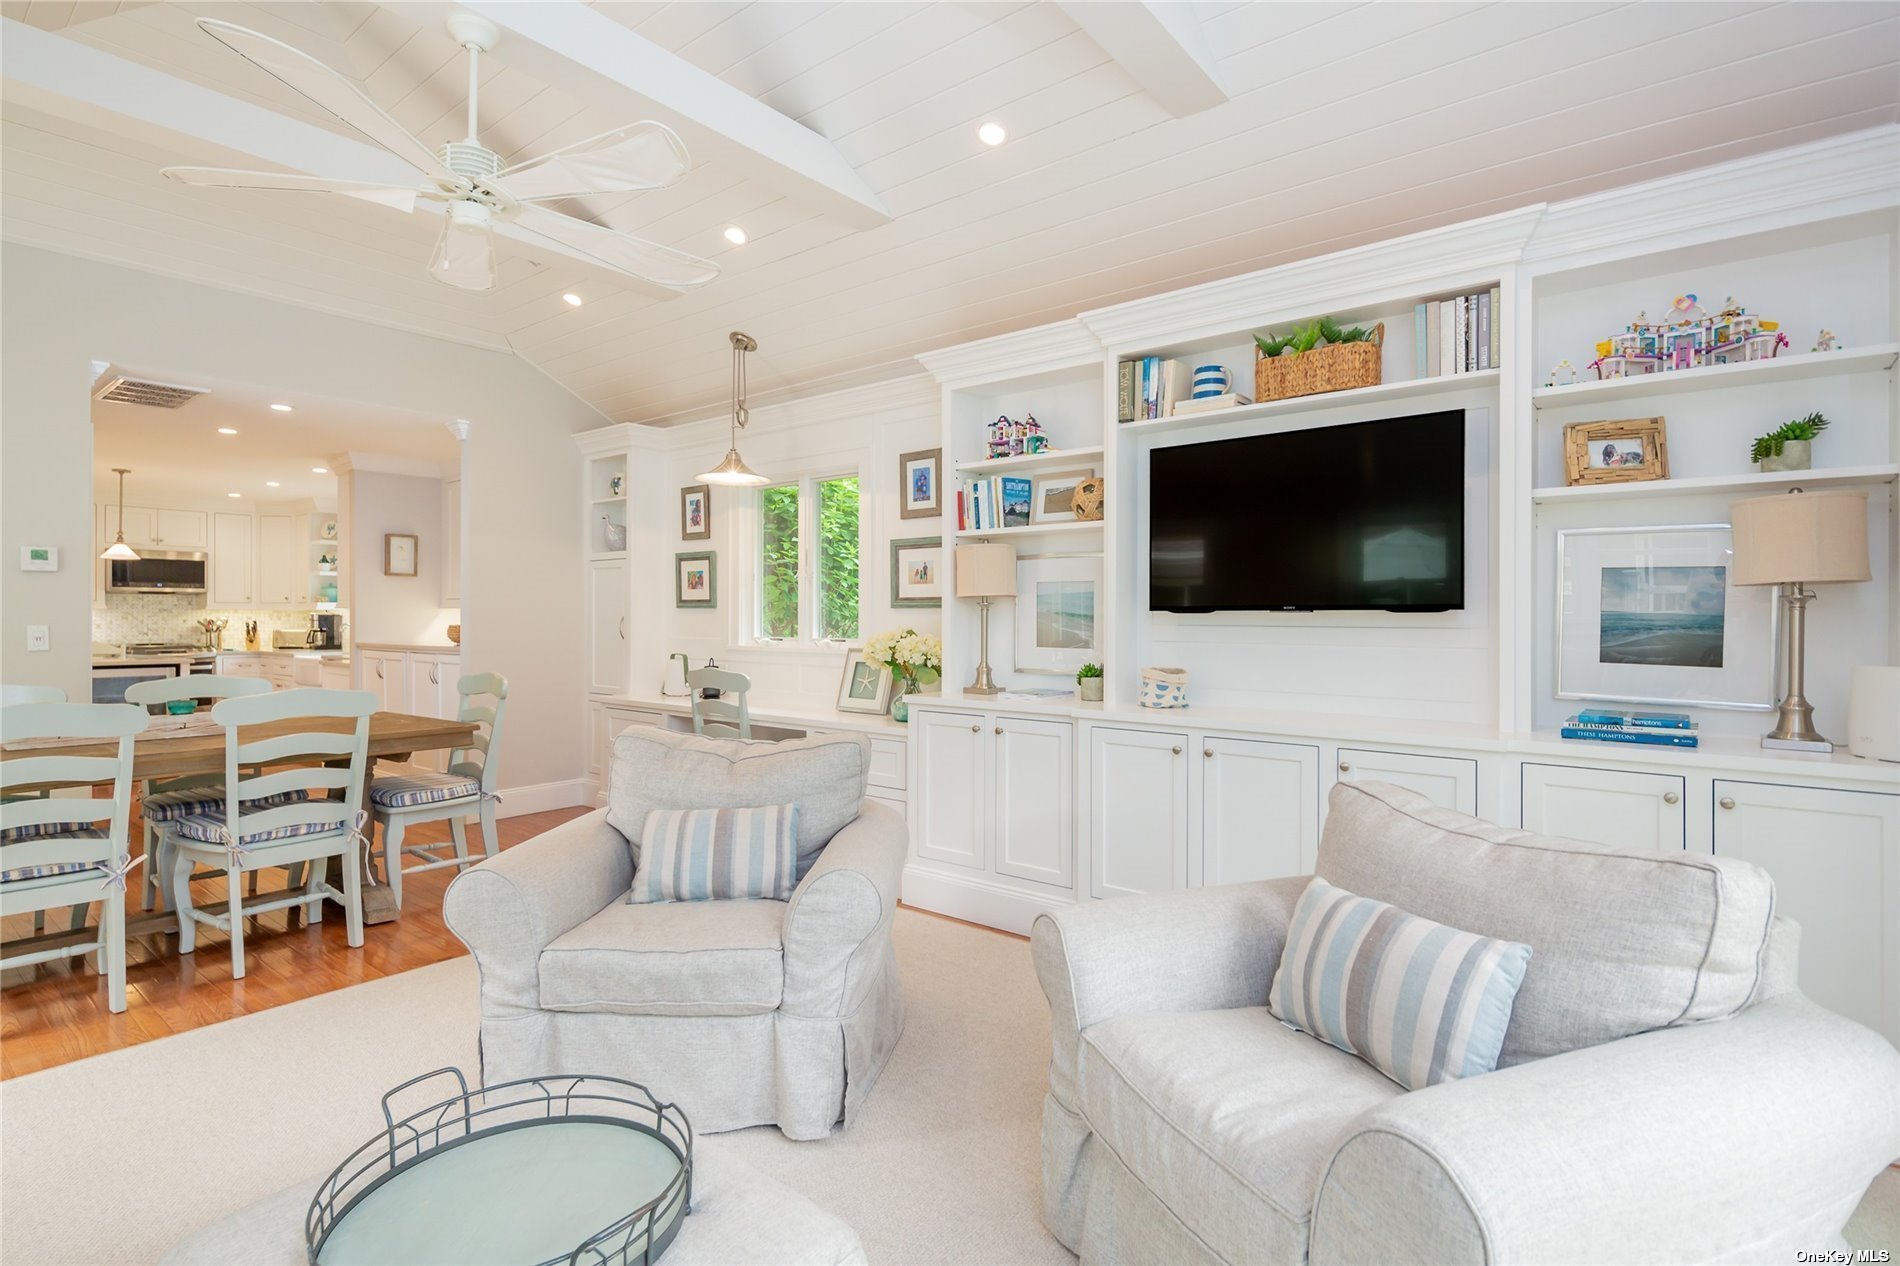 Property for Sale at 36 Corrigan Street, Southampton, Hamptons, NY - Bedrooms: 3 
Bathrooms: 4  - $3,000,000